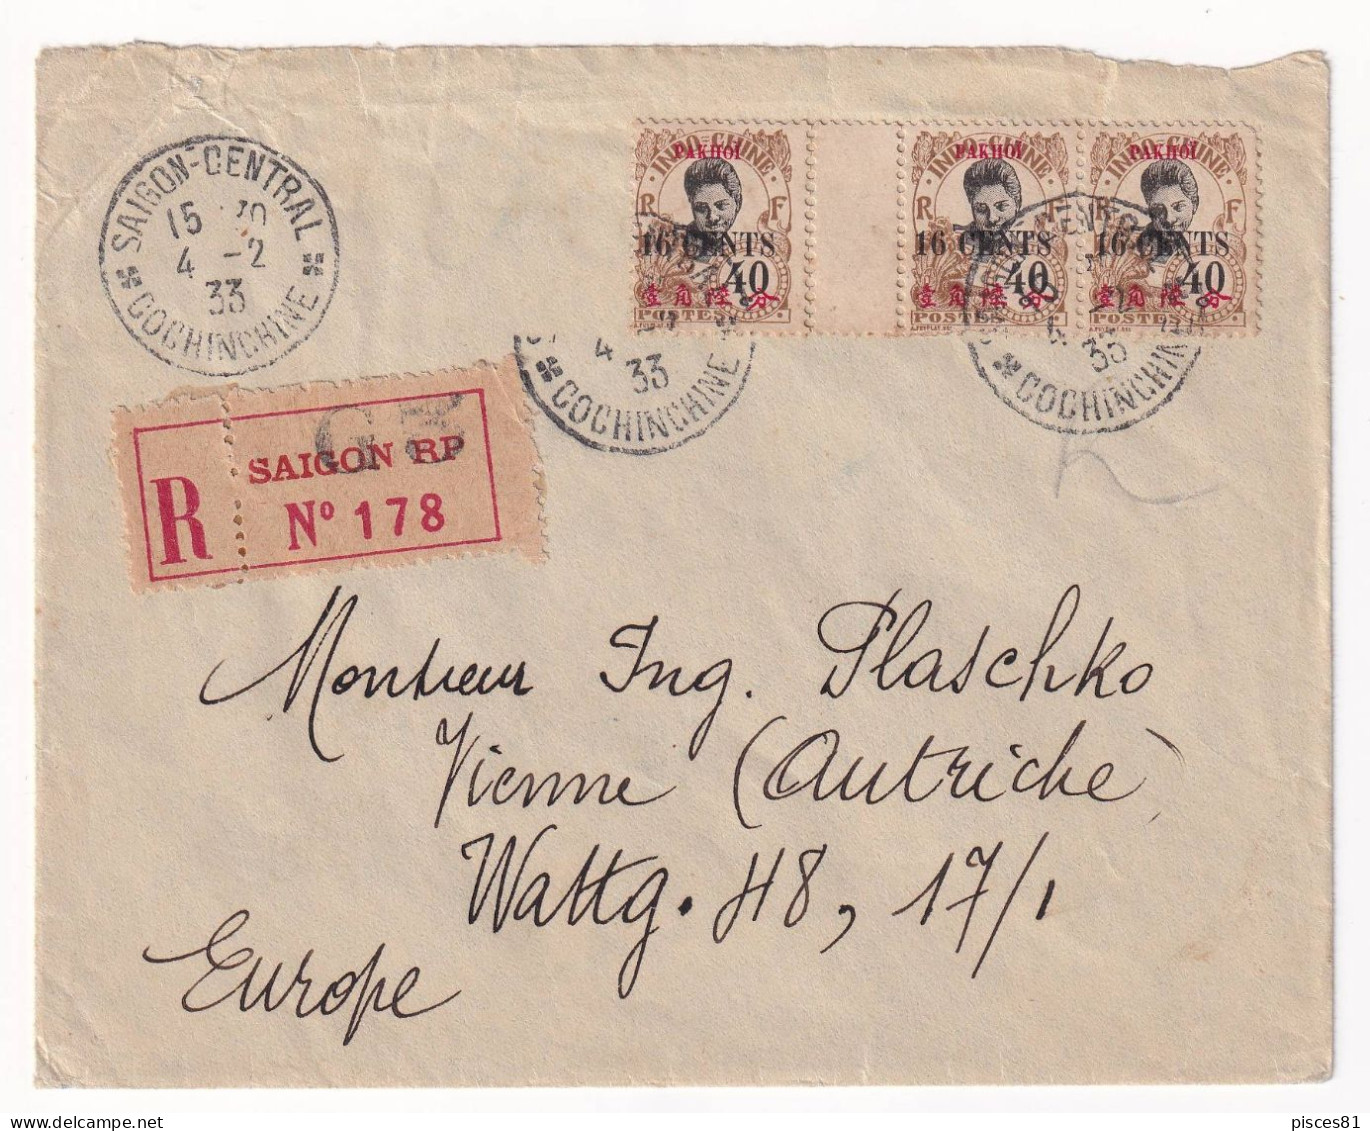 1933 Cover From Saigon To Europe Fraking Pakhoi Stamp Issue - Storia Postale